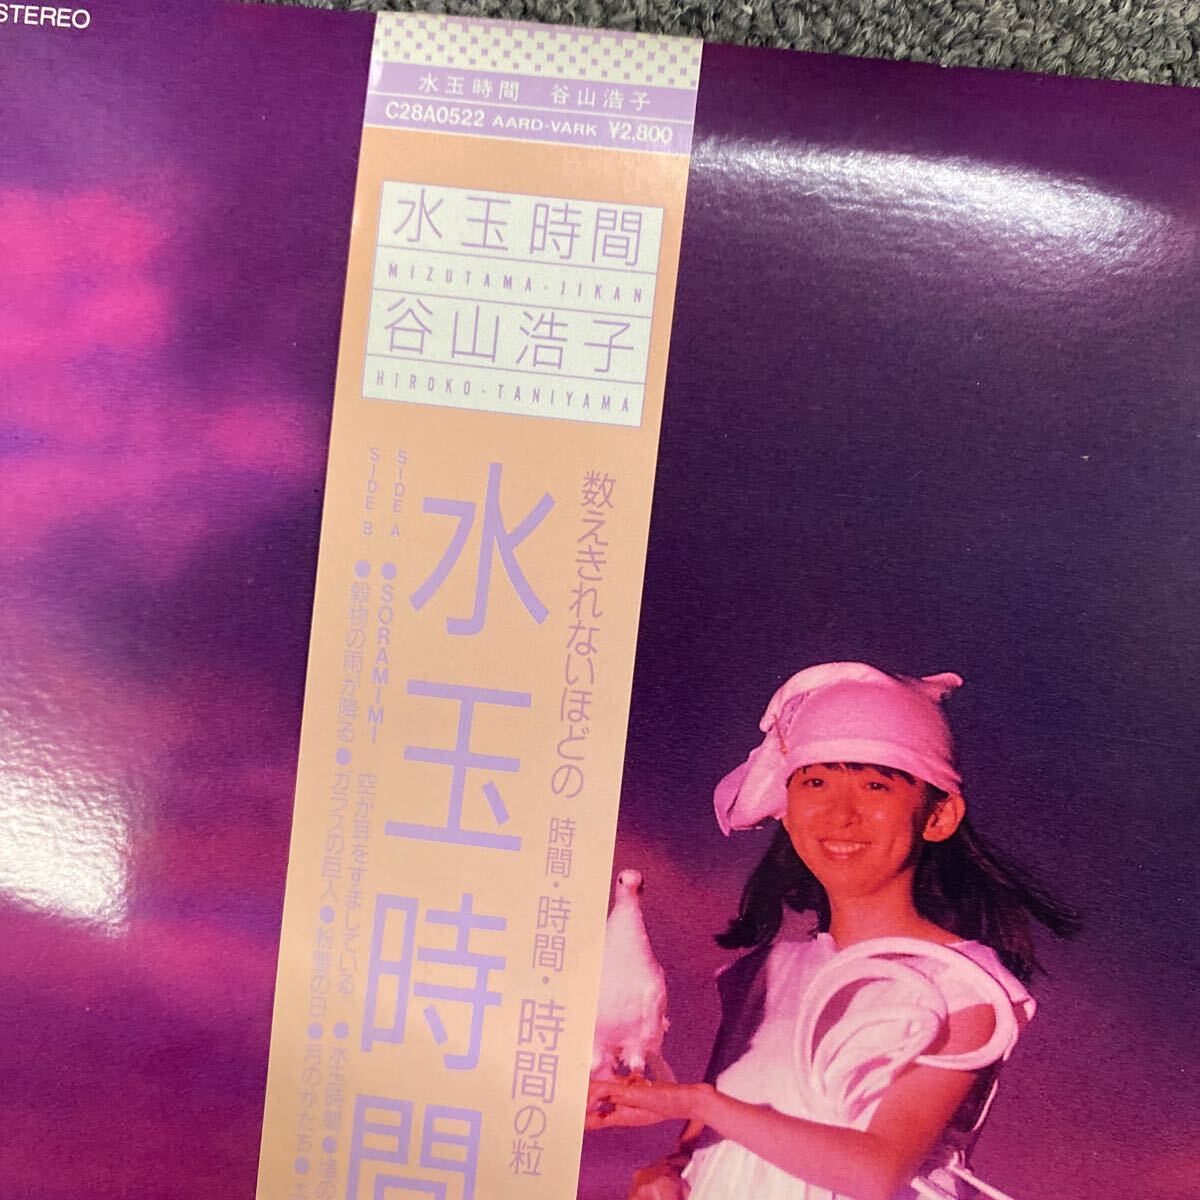 04590 LPレコード 見本盤/非売品 水玉時間 / 谷山浩子 HIROKO TANIYAMA 1986年 帯付 動作未確認_画像3